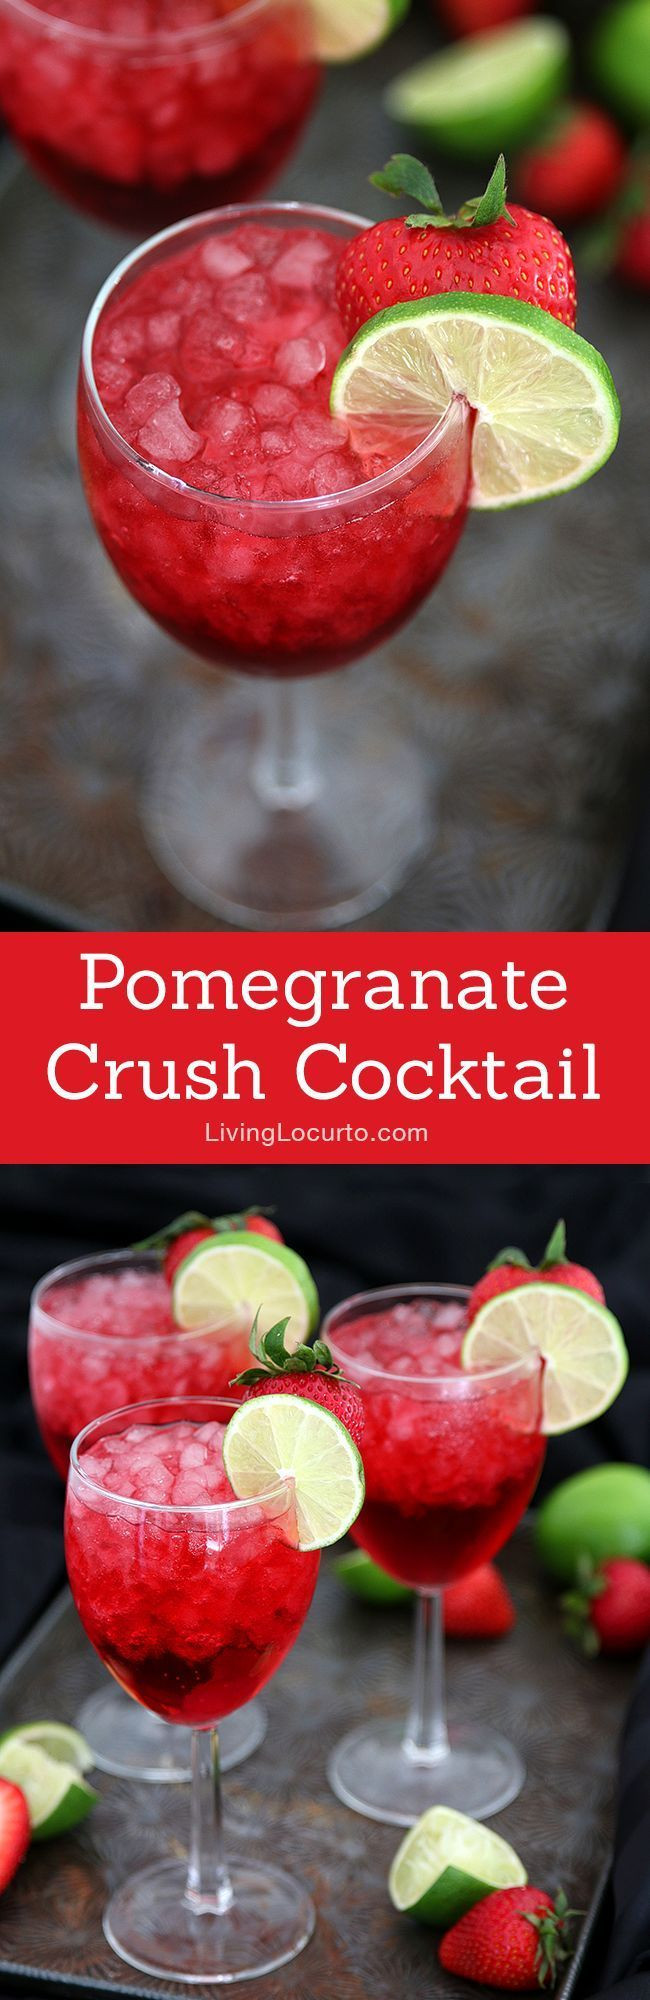 Pomegranate Cocktails Recipes
 Pomegranate Crush Cocktail Recipe